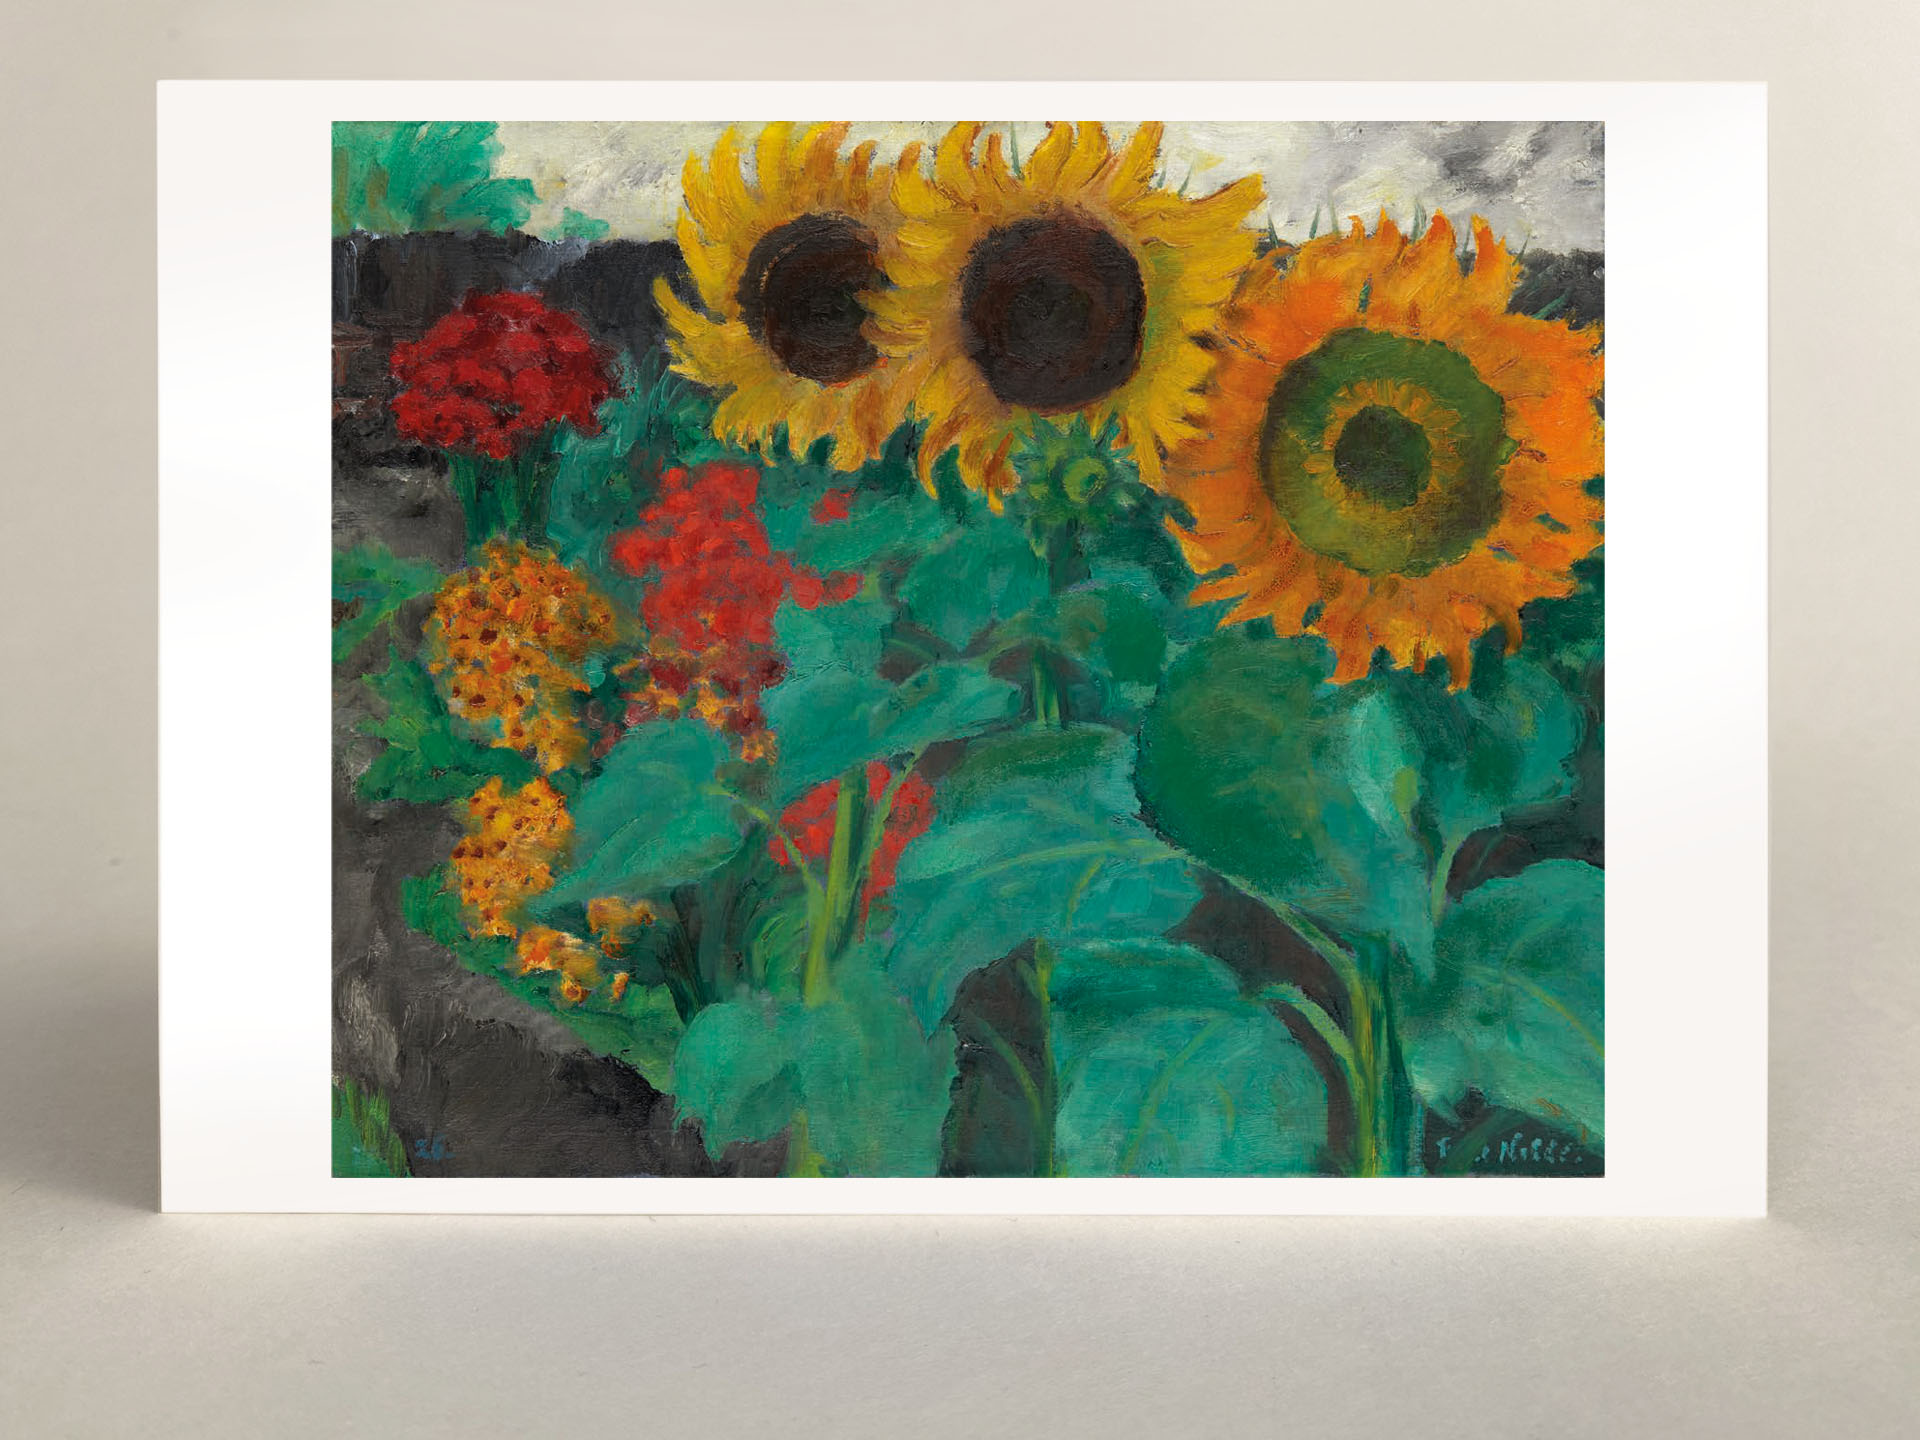 Kunstkarte: "Sonnenblumen"